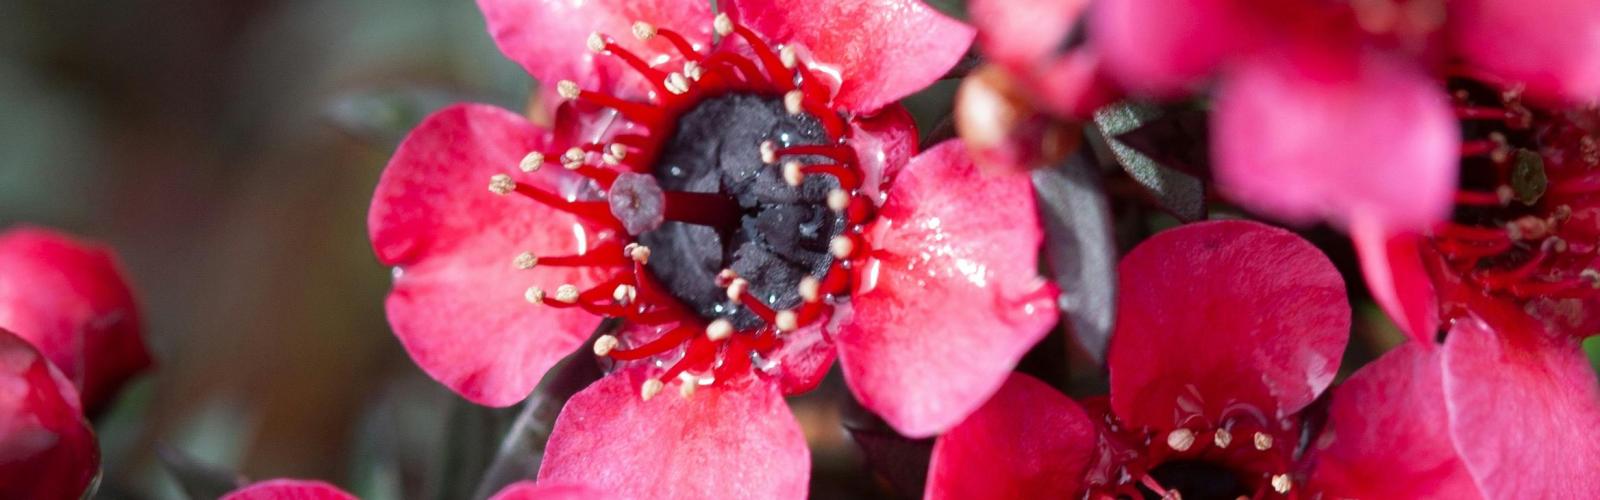 Leptospermum scoparium : Cultivez le Manuka